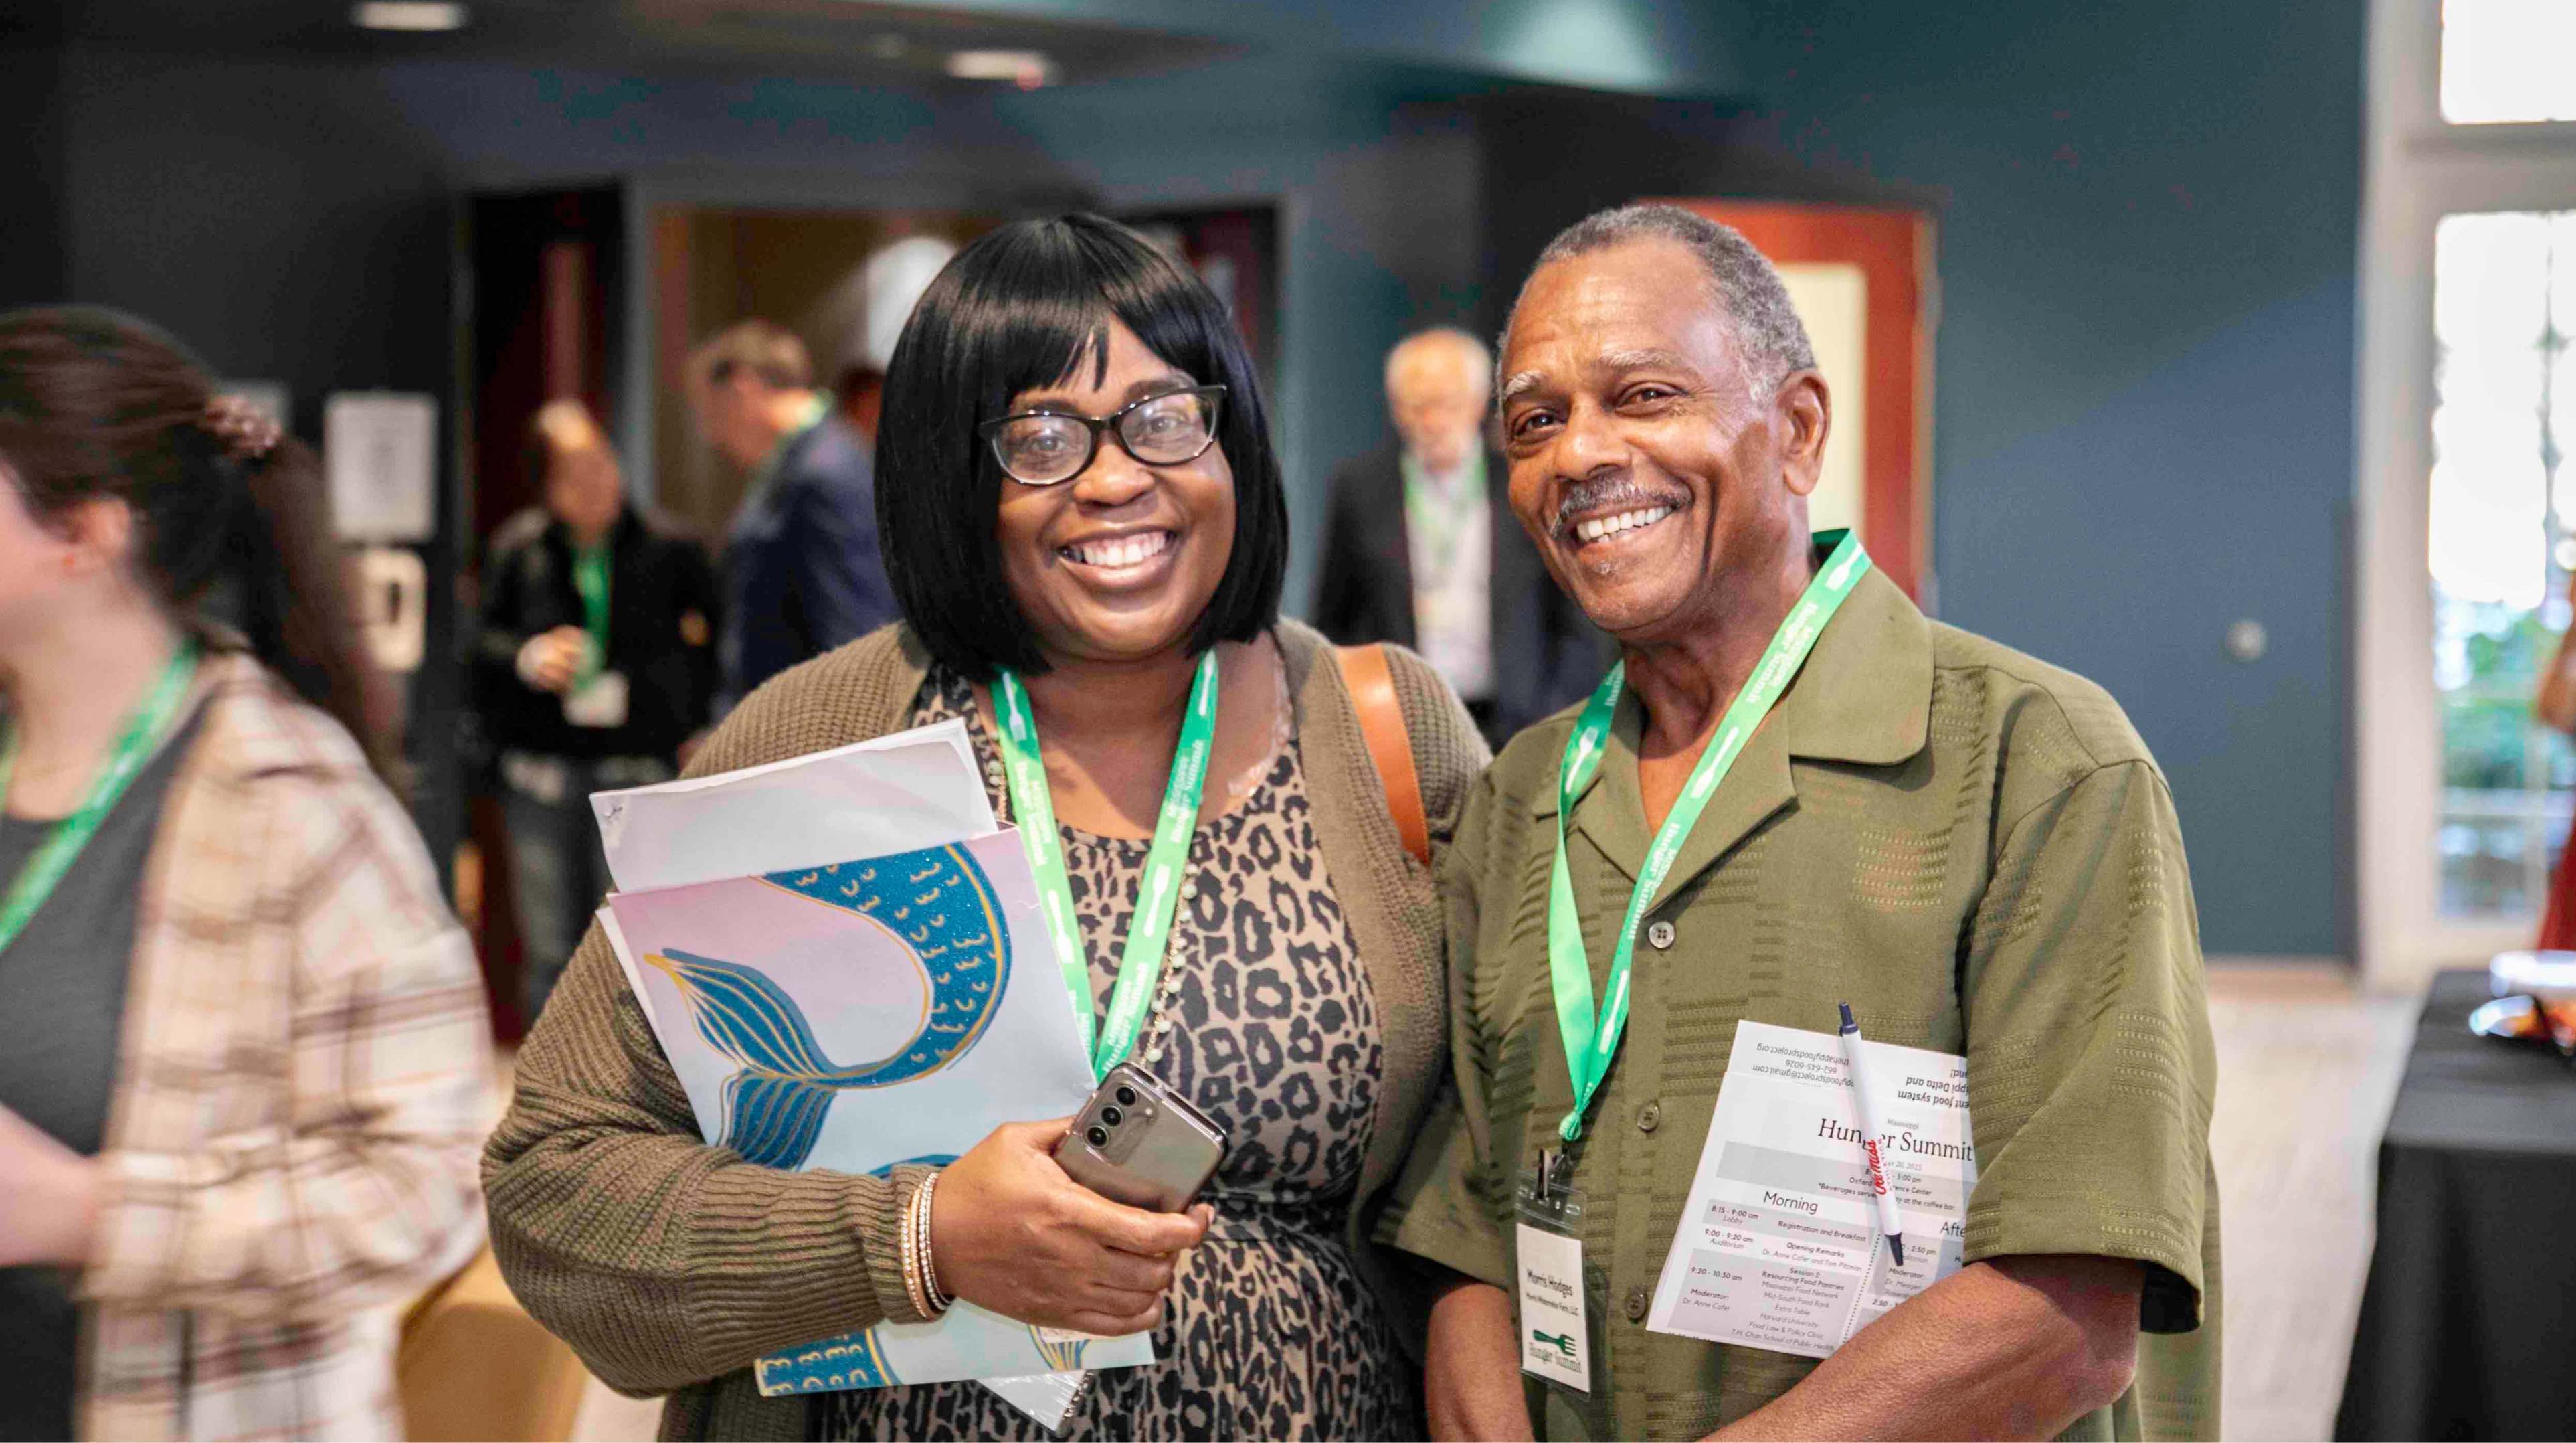 Two conference participants smile.